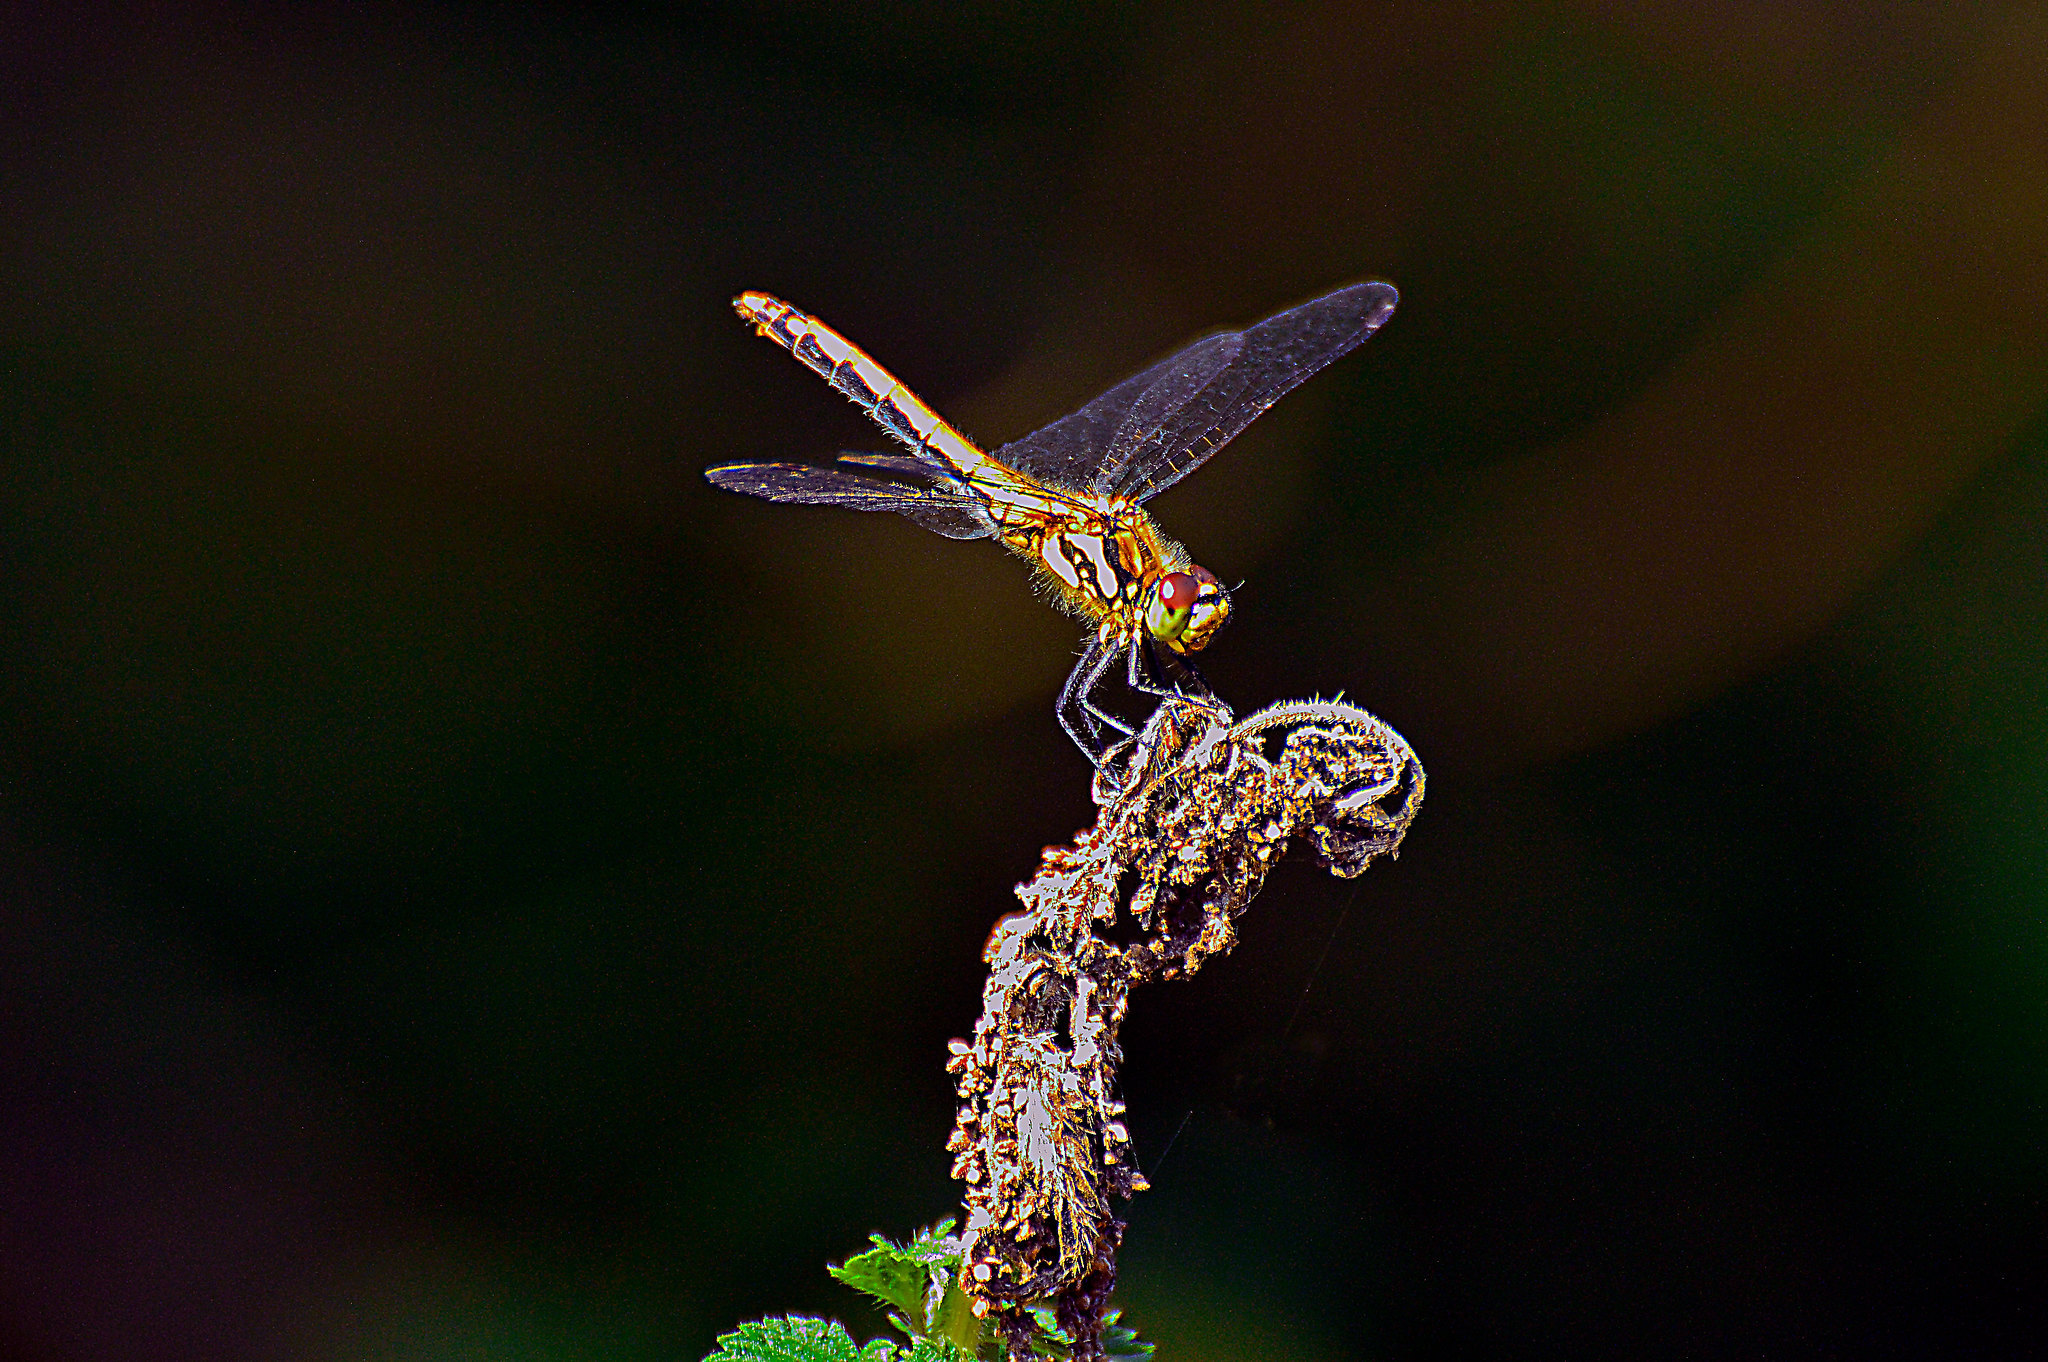 A dragonfly by Joy Beresford